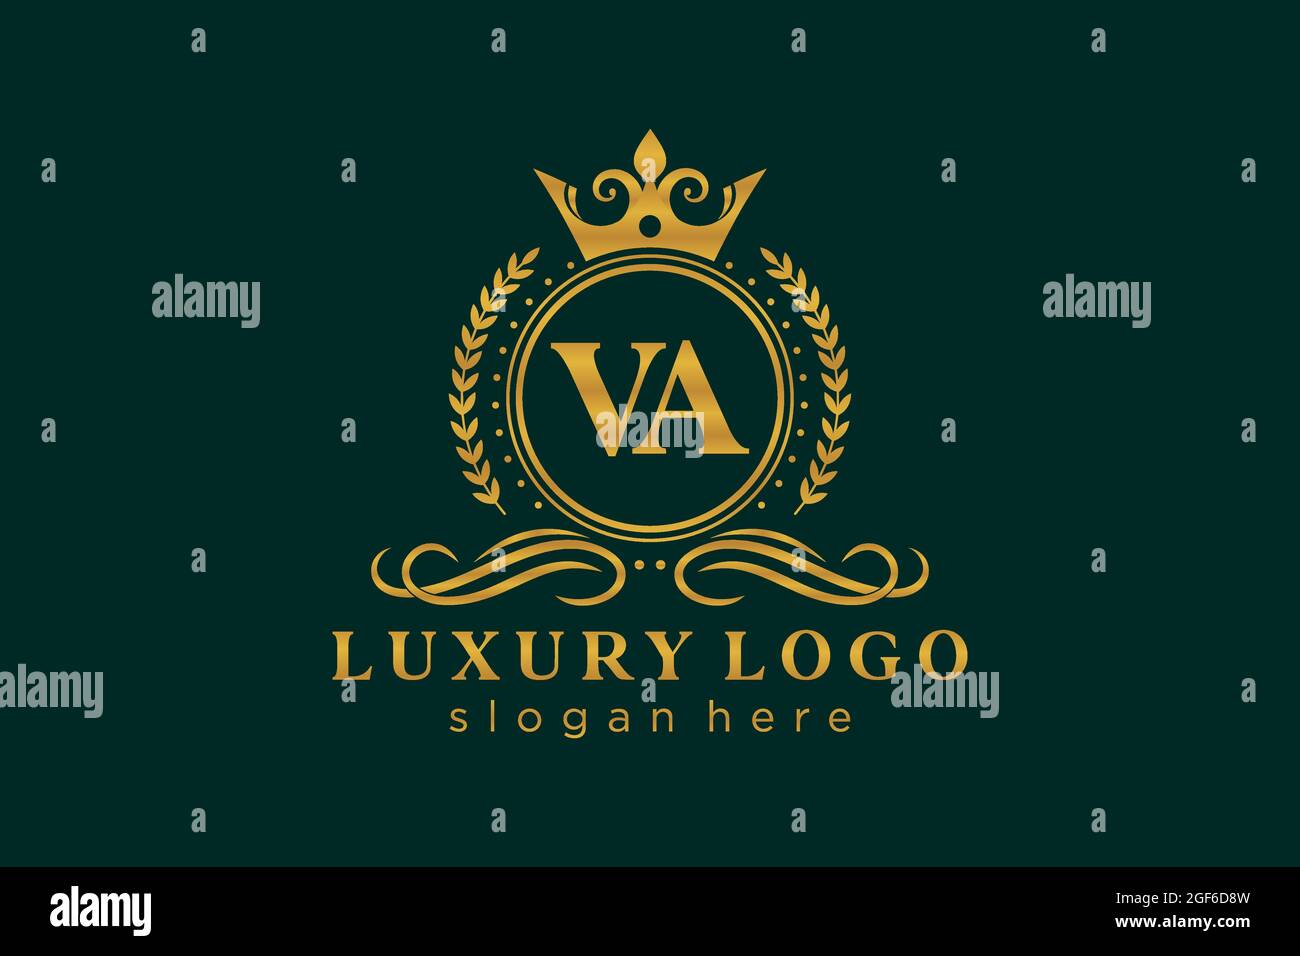 VA Letter Royal Luxury Logo Vorlage in Vektorgrafik für Restaurant, Royalty, Boutique, Cafe, Hotel, Heraldisch, Schmuck, Mode und andere Vektor illustrr Stock Vektor